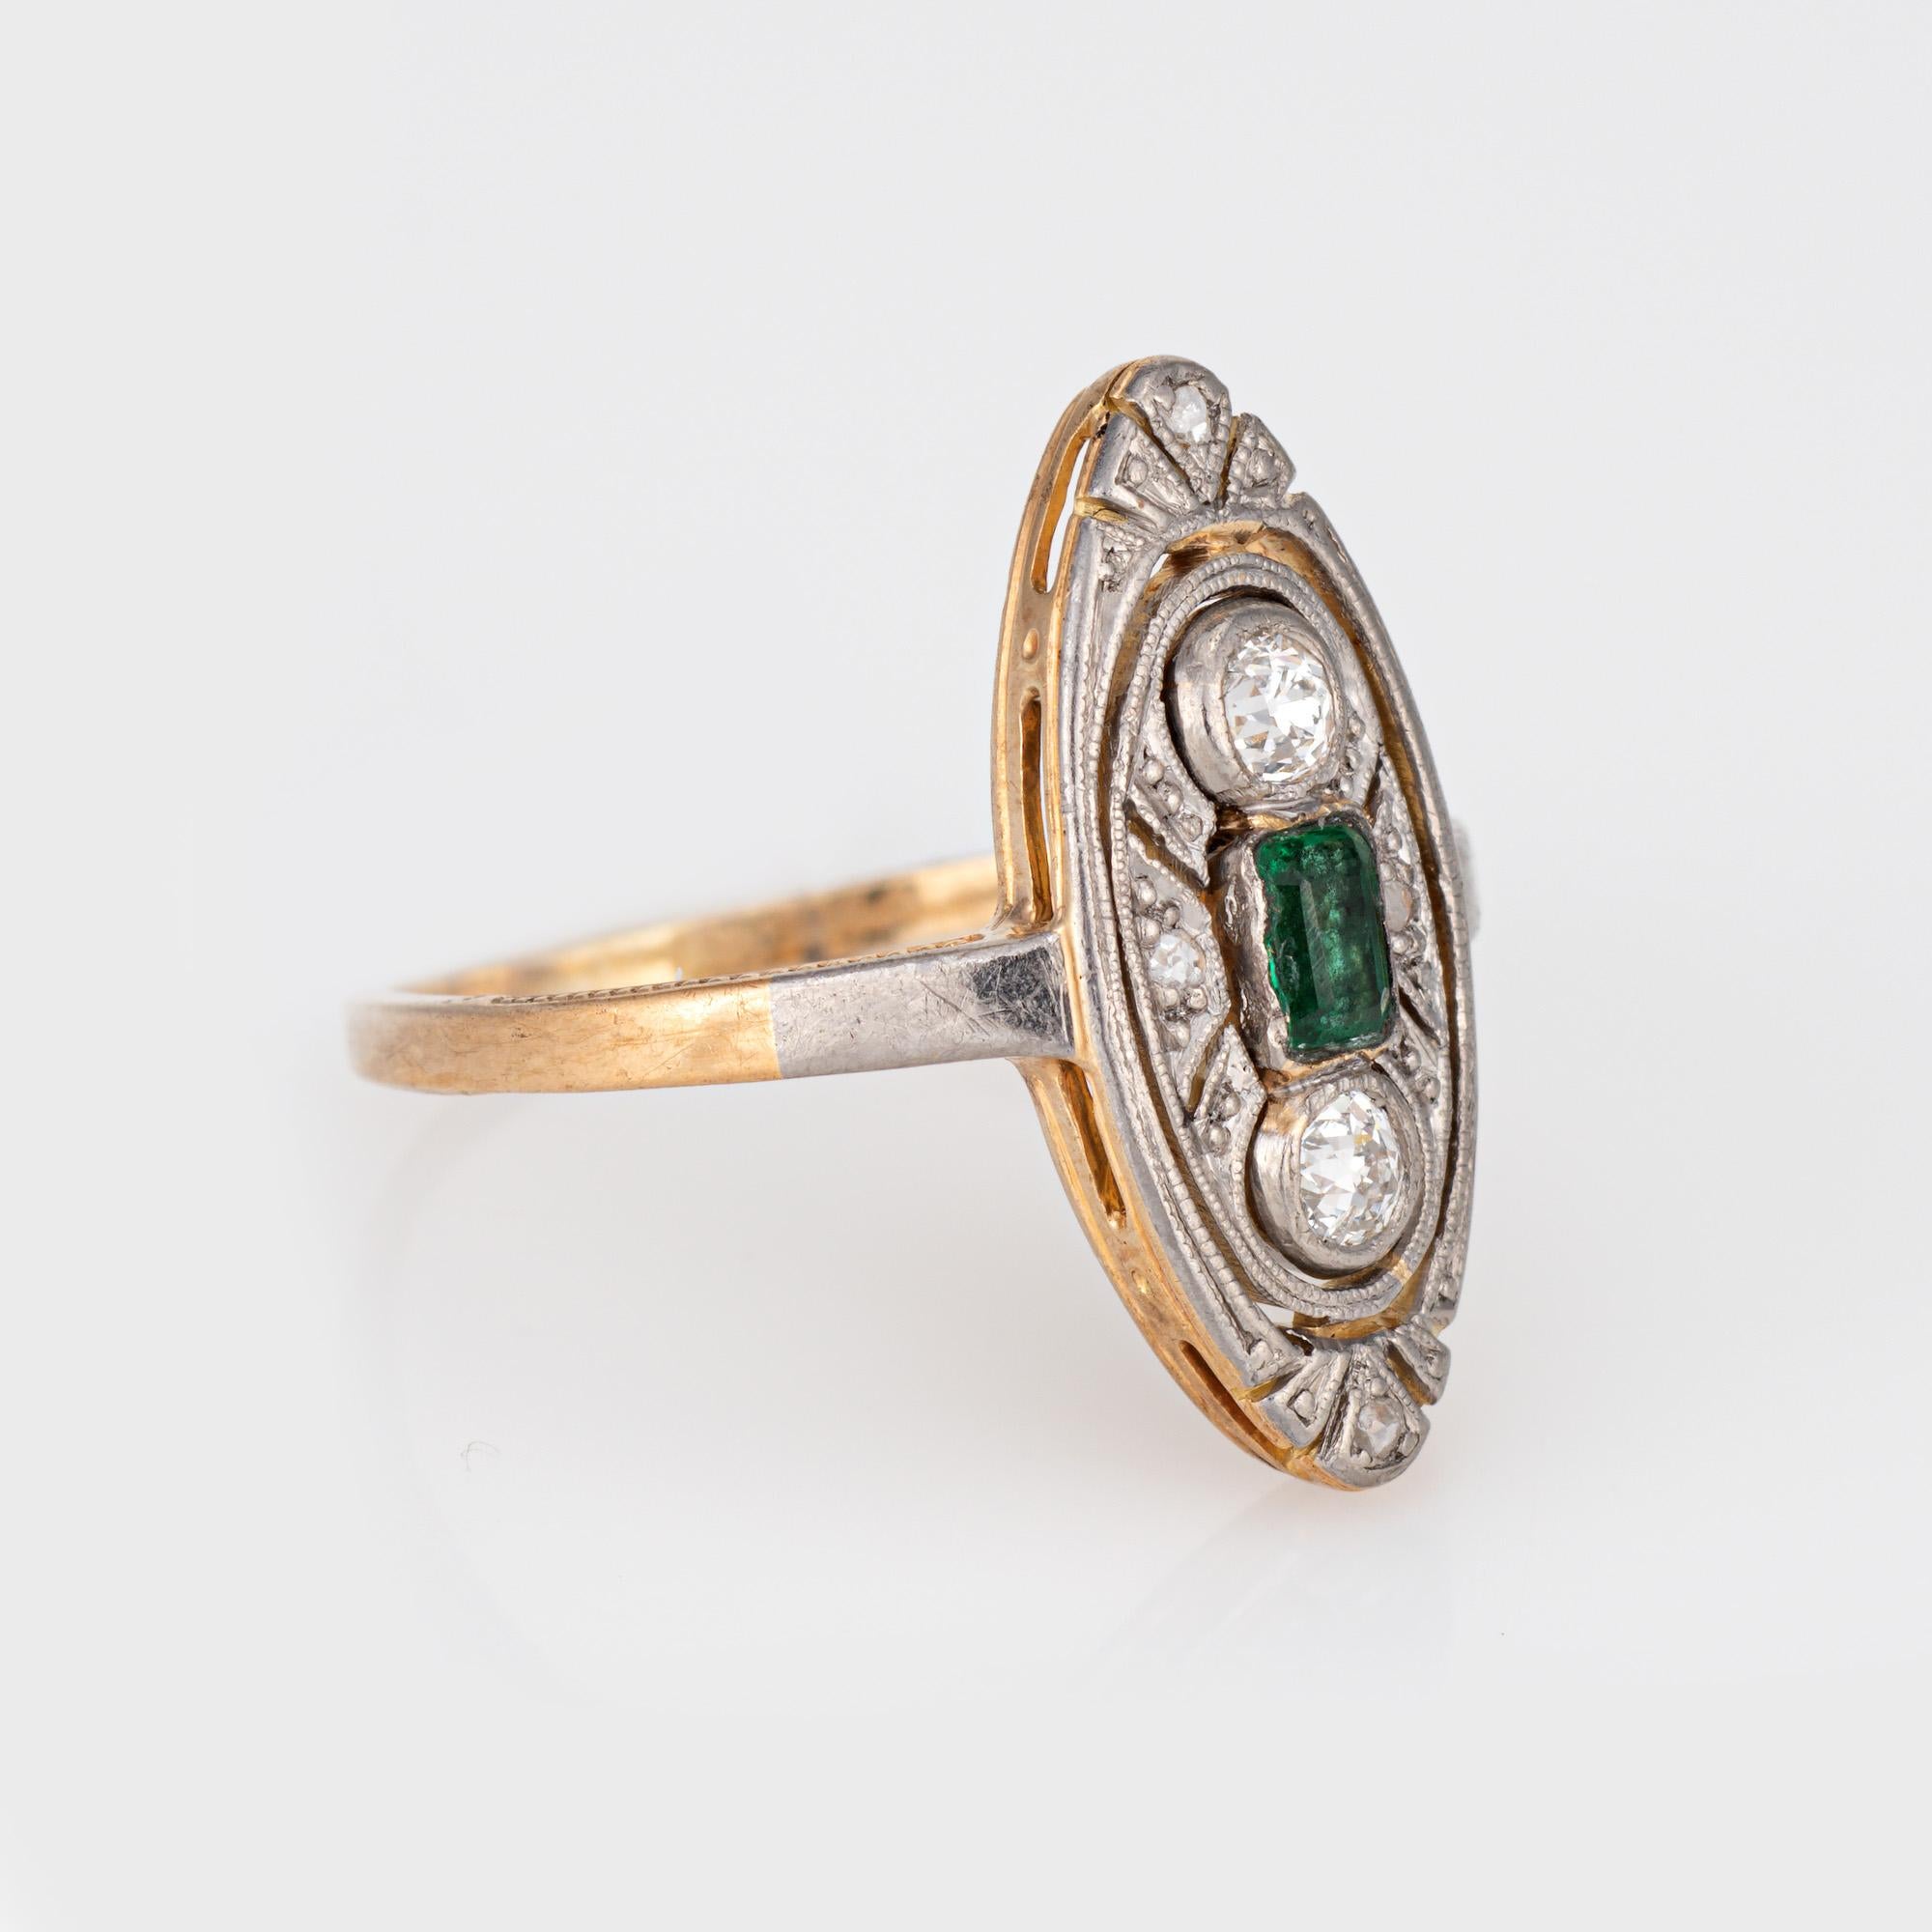 Old Mine Cut Vintage Art Deco Emerald Diamond Ring 14k Yellow Gold Estate Fine Jewelry